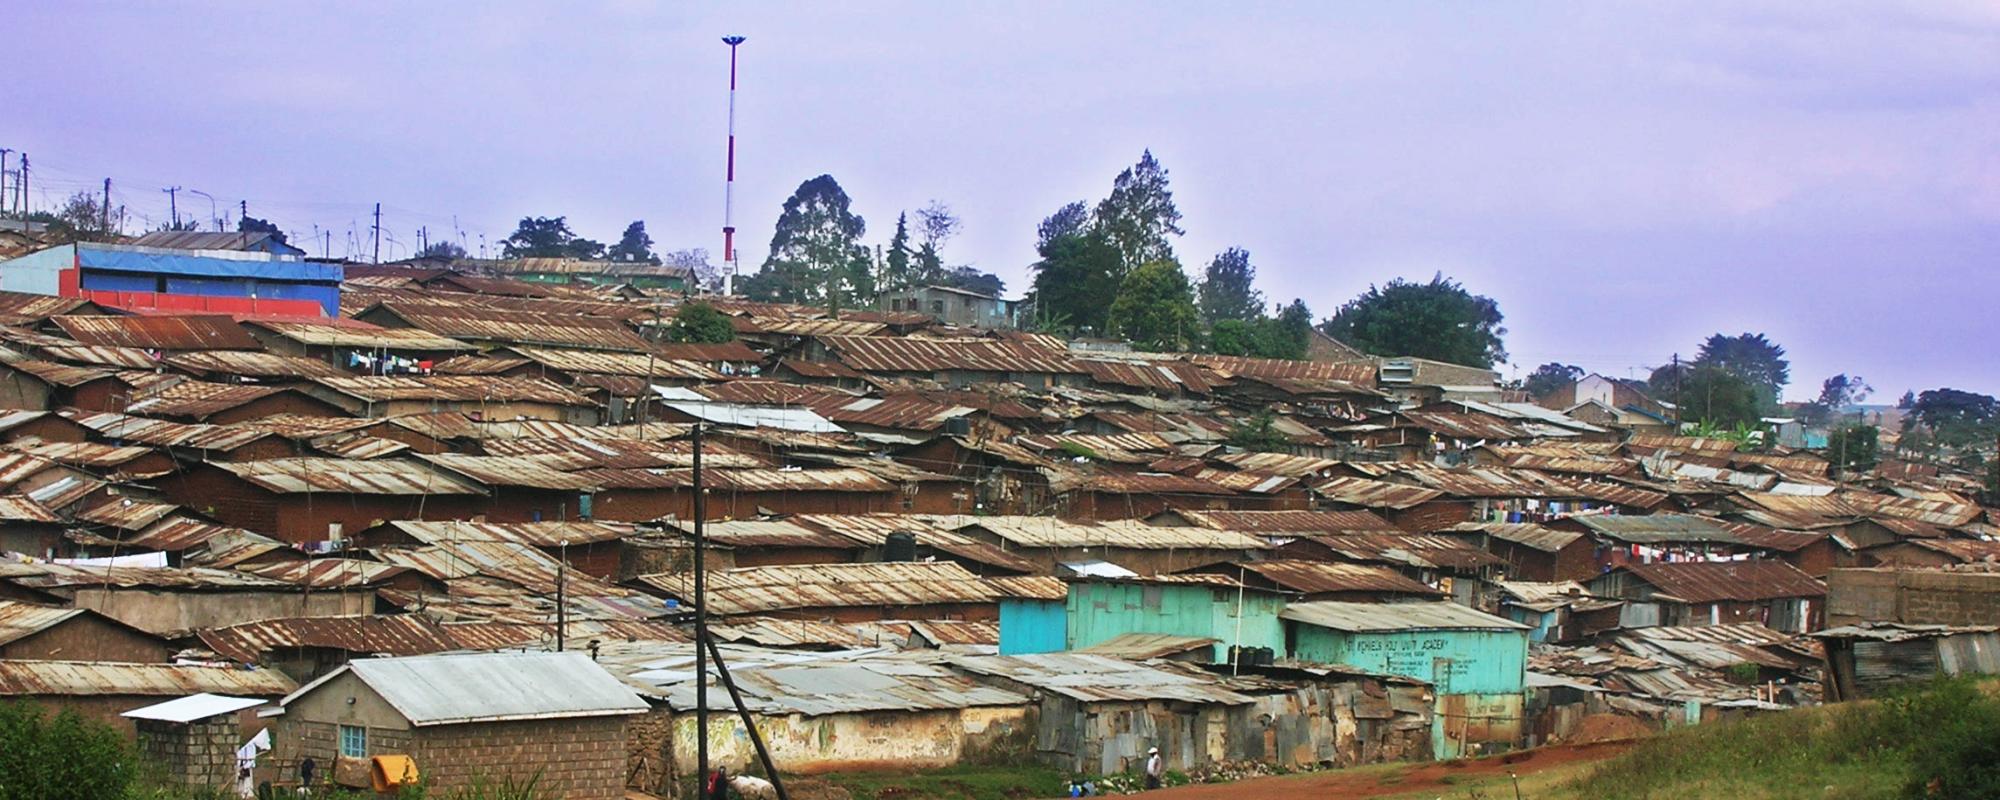 Kenya poverty homes